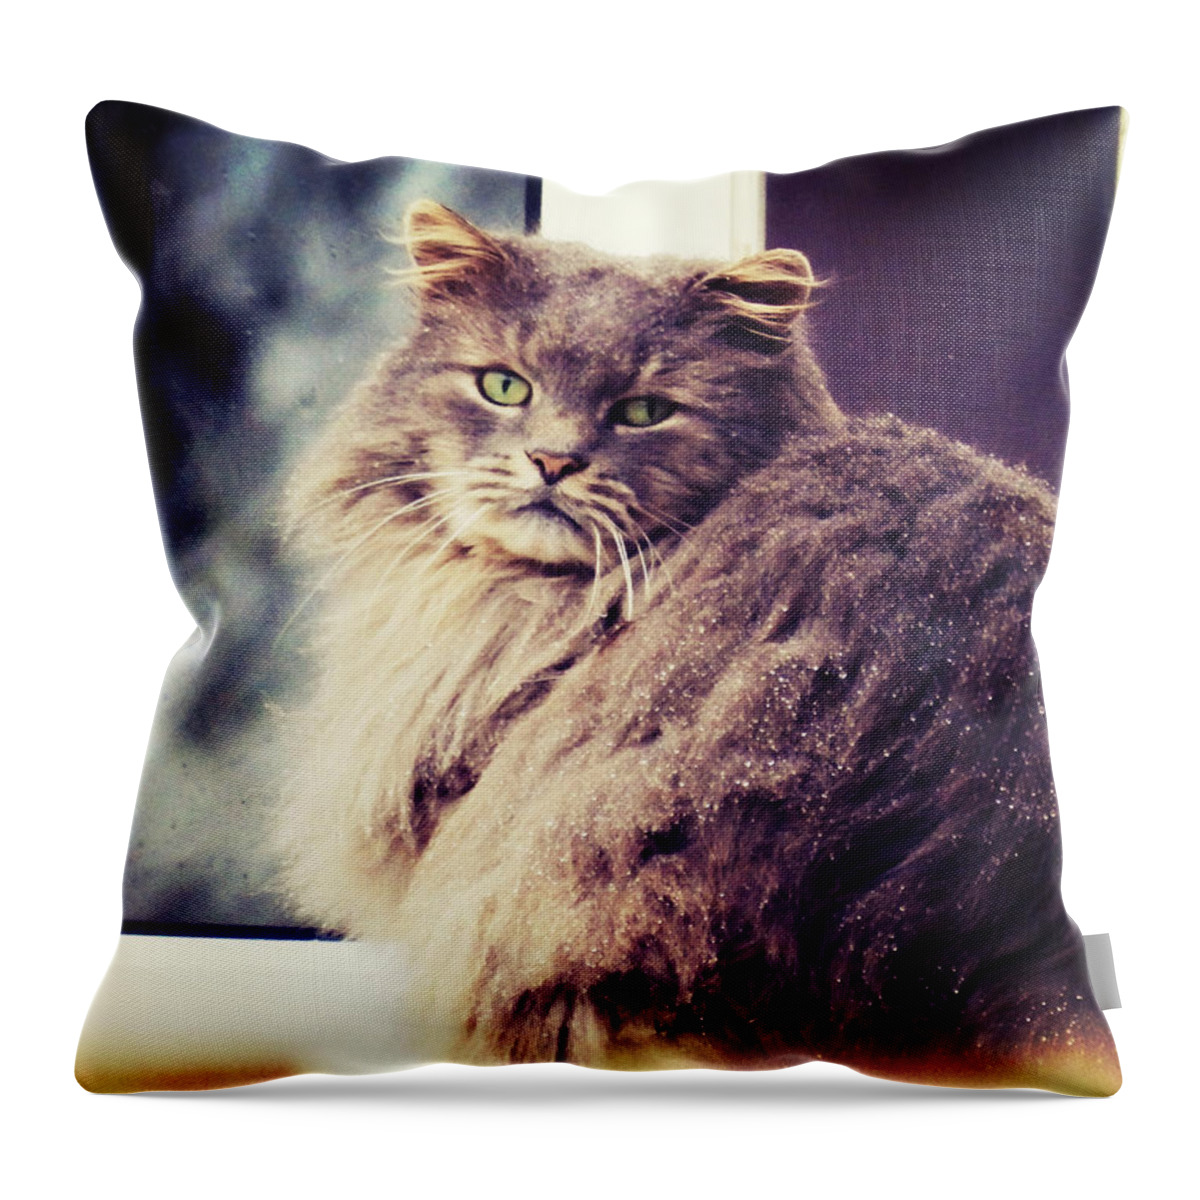 Cat Throw Pillow featuring the photograph Gaze #1 by Zinvolle Art